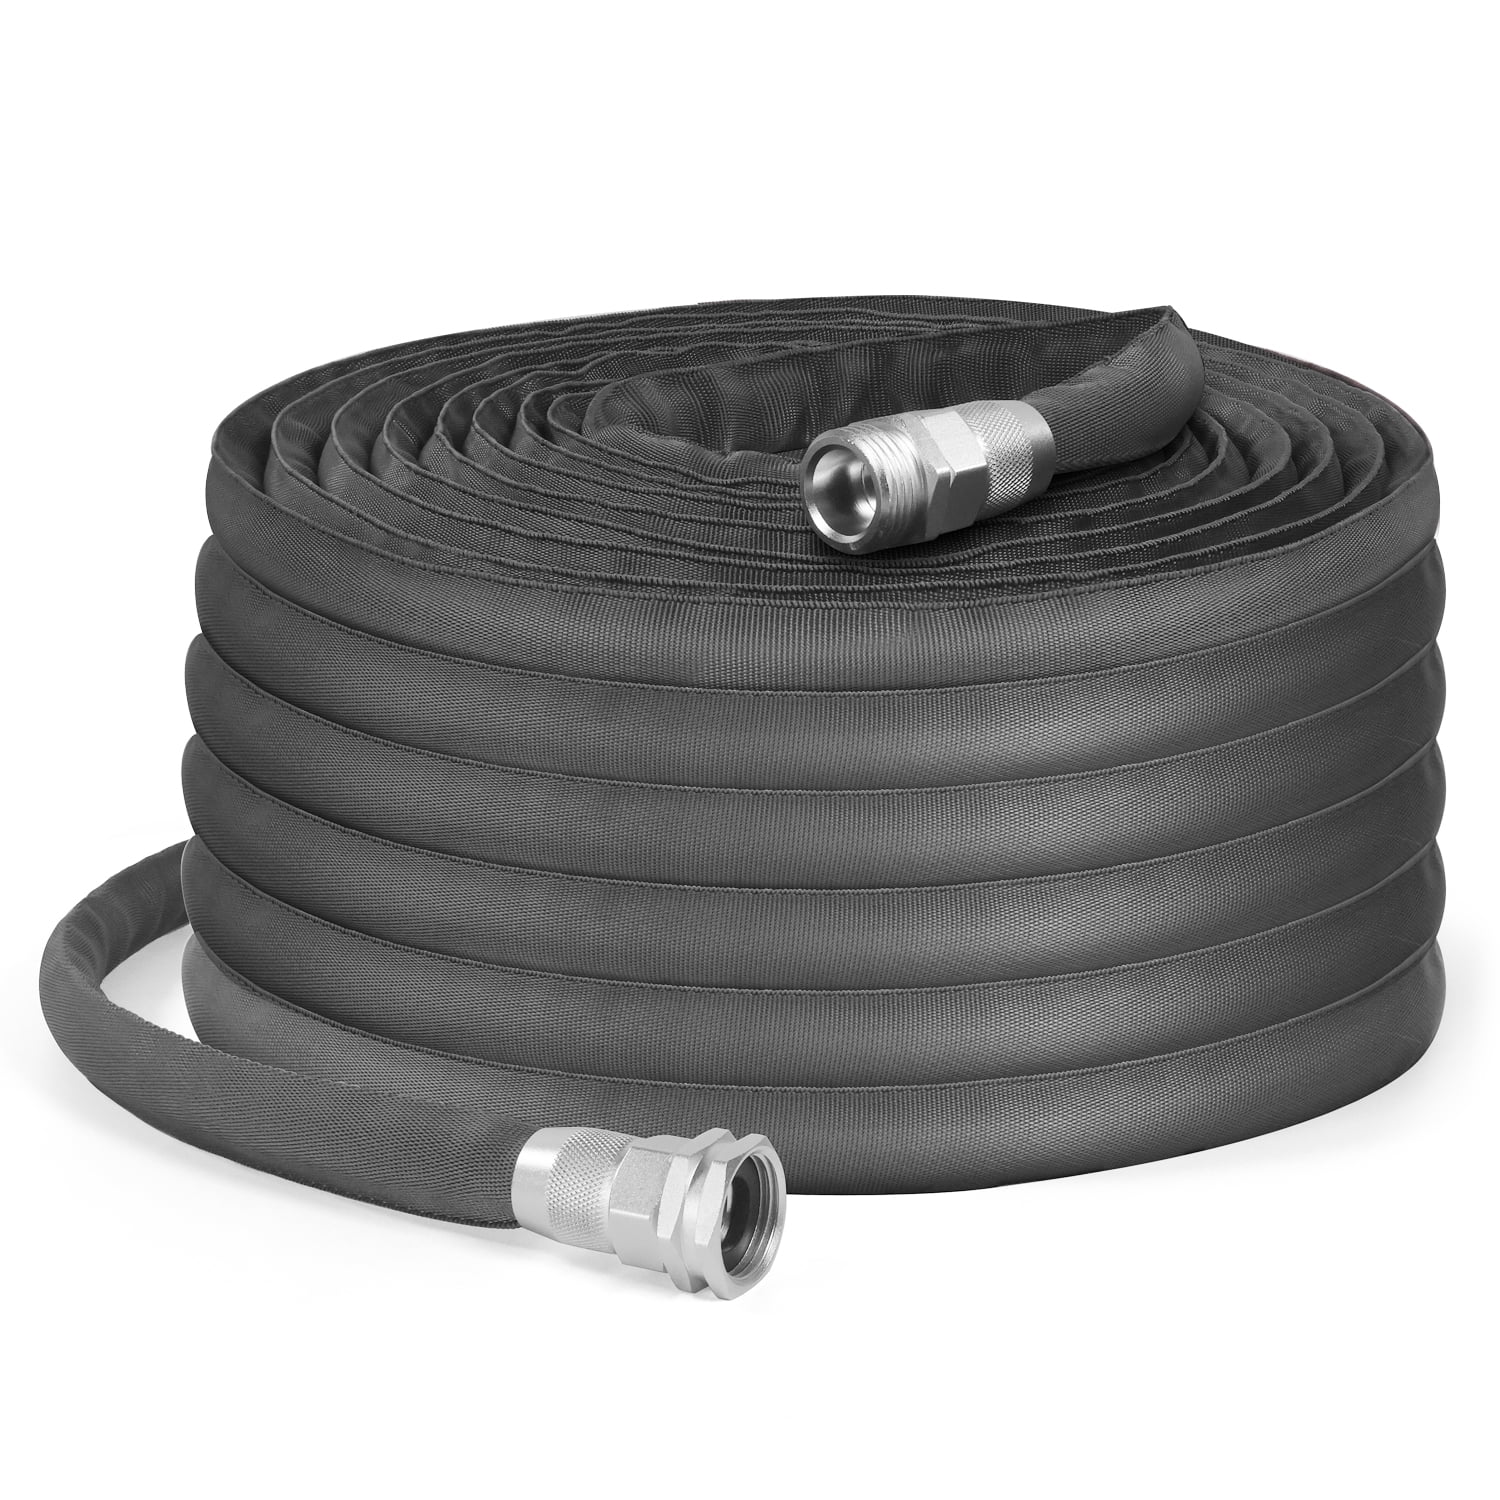 Utility hose reel for rv for Gardens & Irrigation 